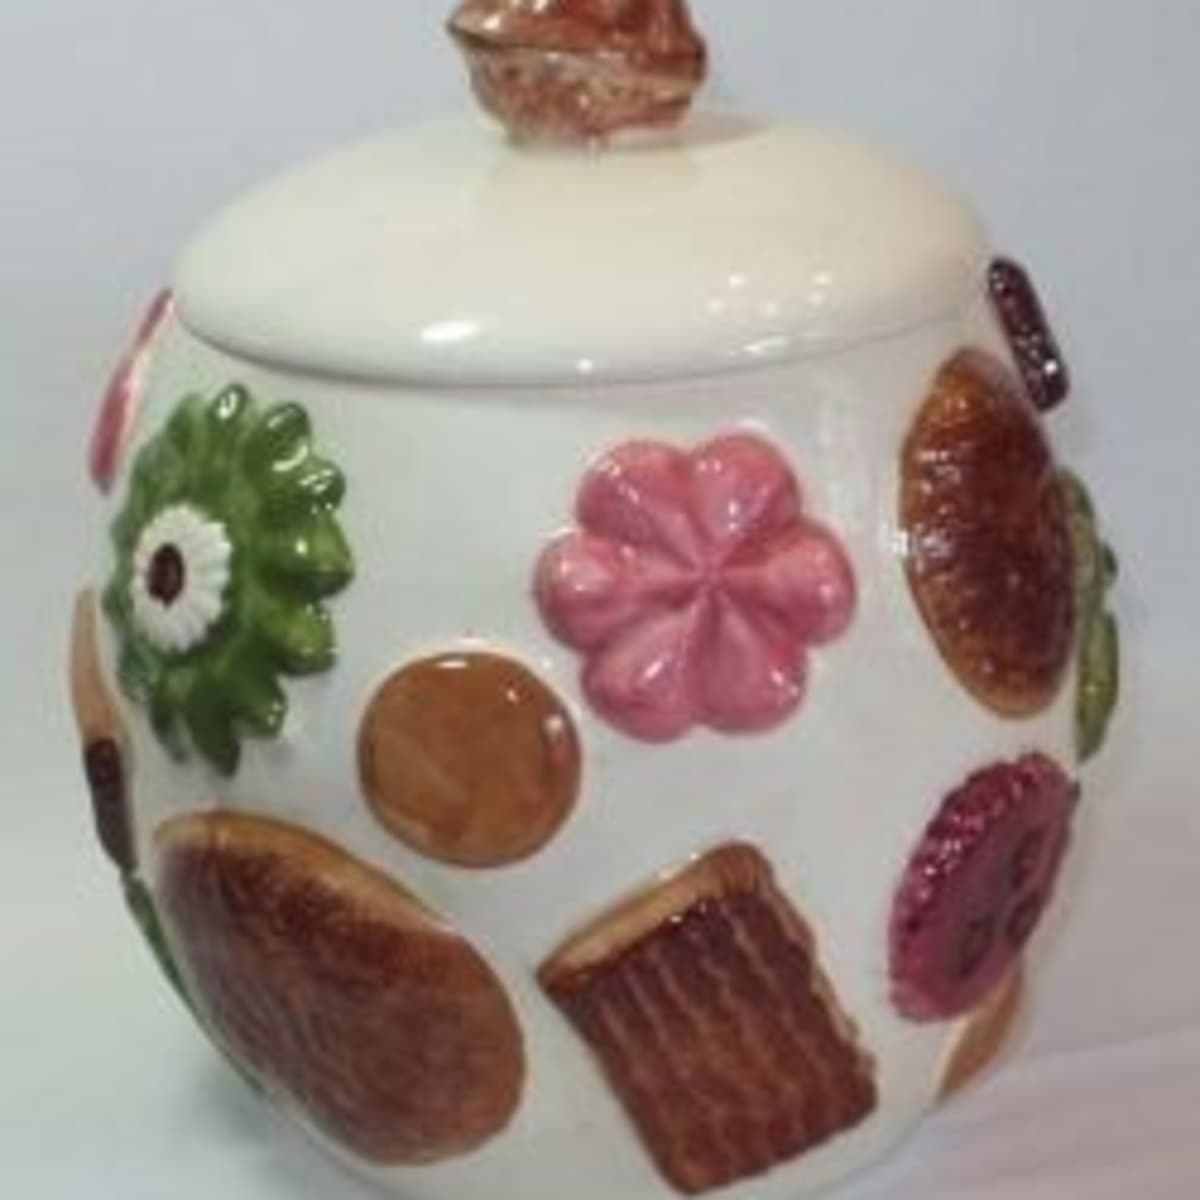 Handmade vintage ceramic holiday cookie jar